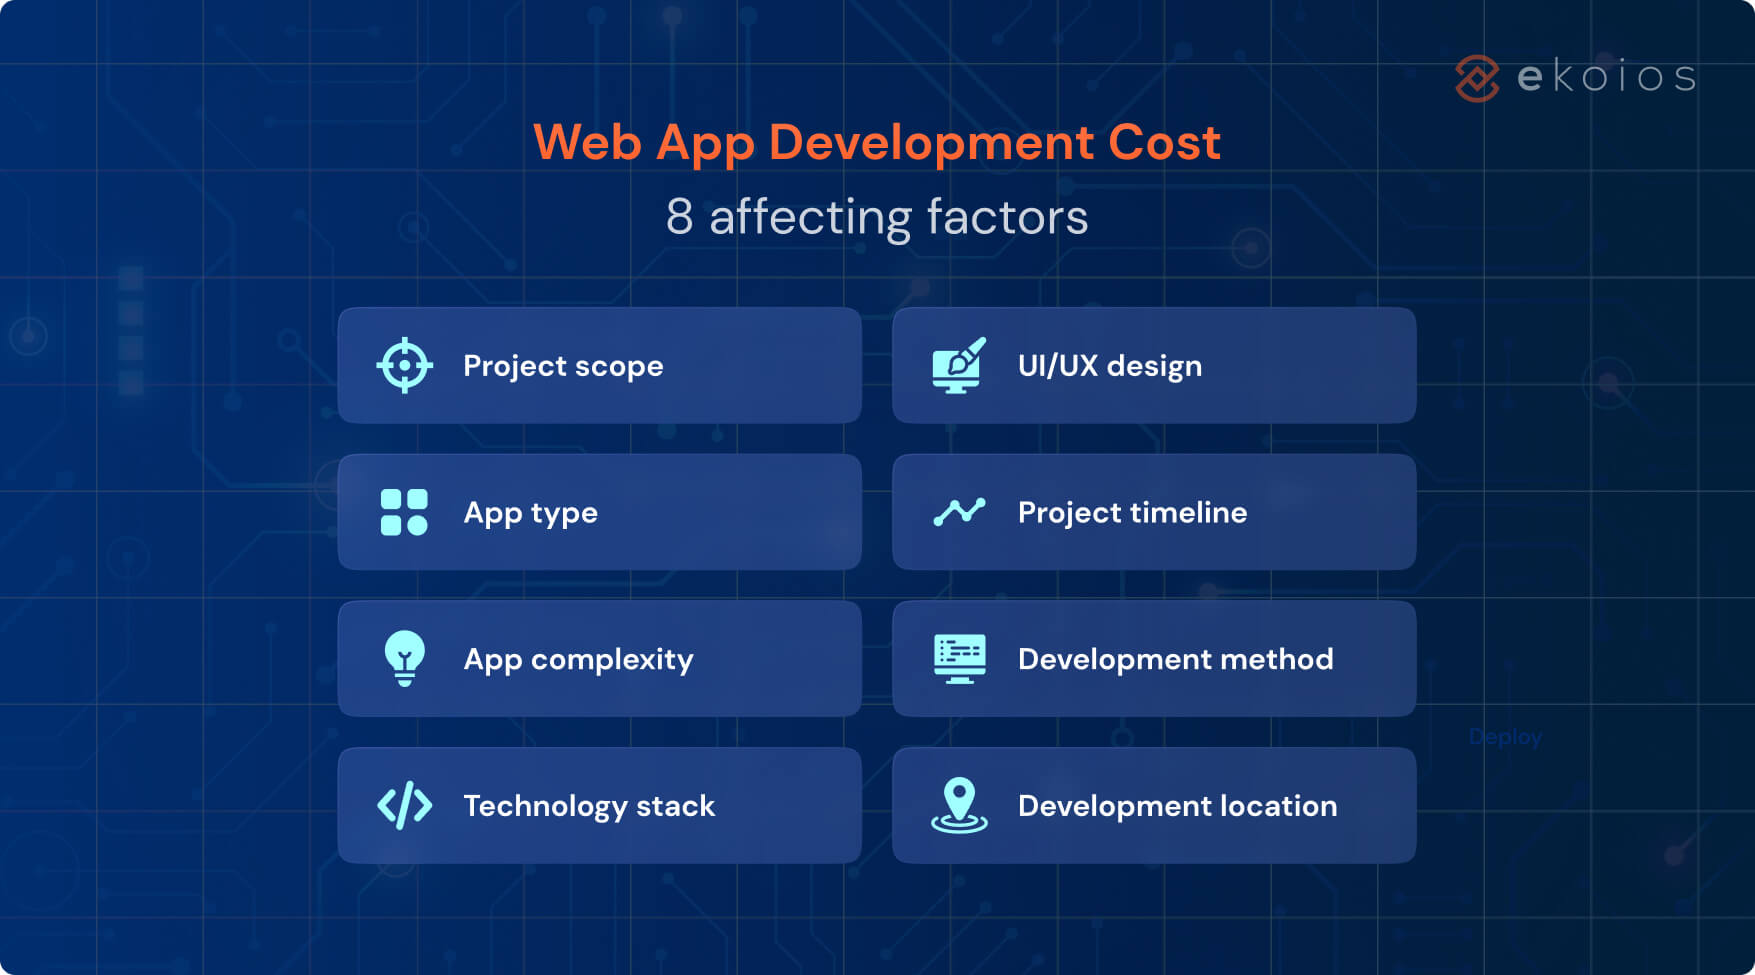 web app development cost - 8 affecting factors